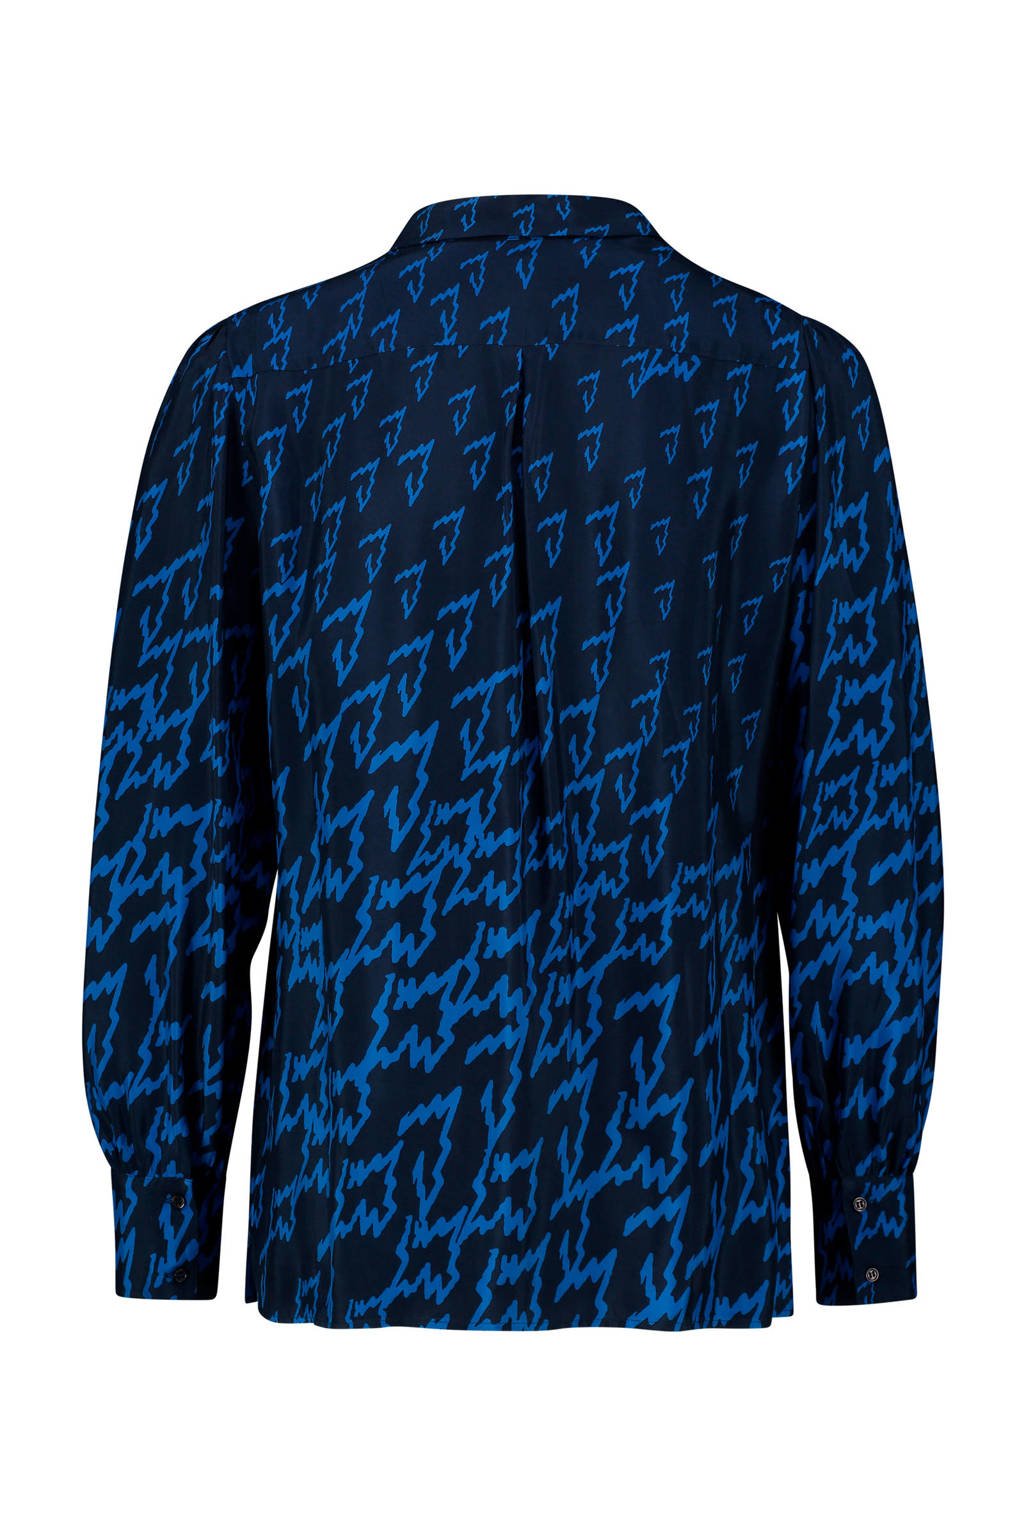 Vroegst medeklinker Ewell Expresso blouse met all over print zwart/blauw | wehkamp